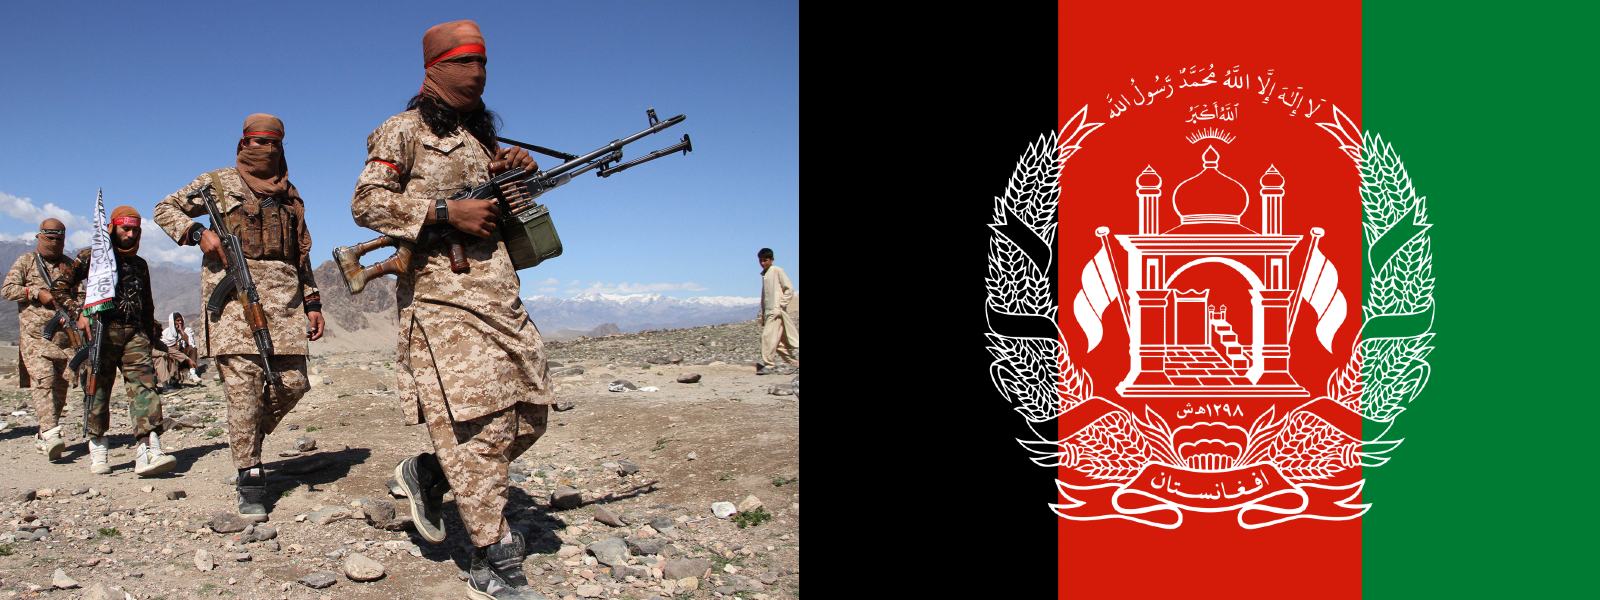 Taliban spokesman says “war is over in Afghanistan”